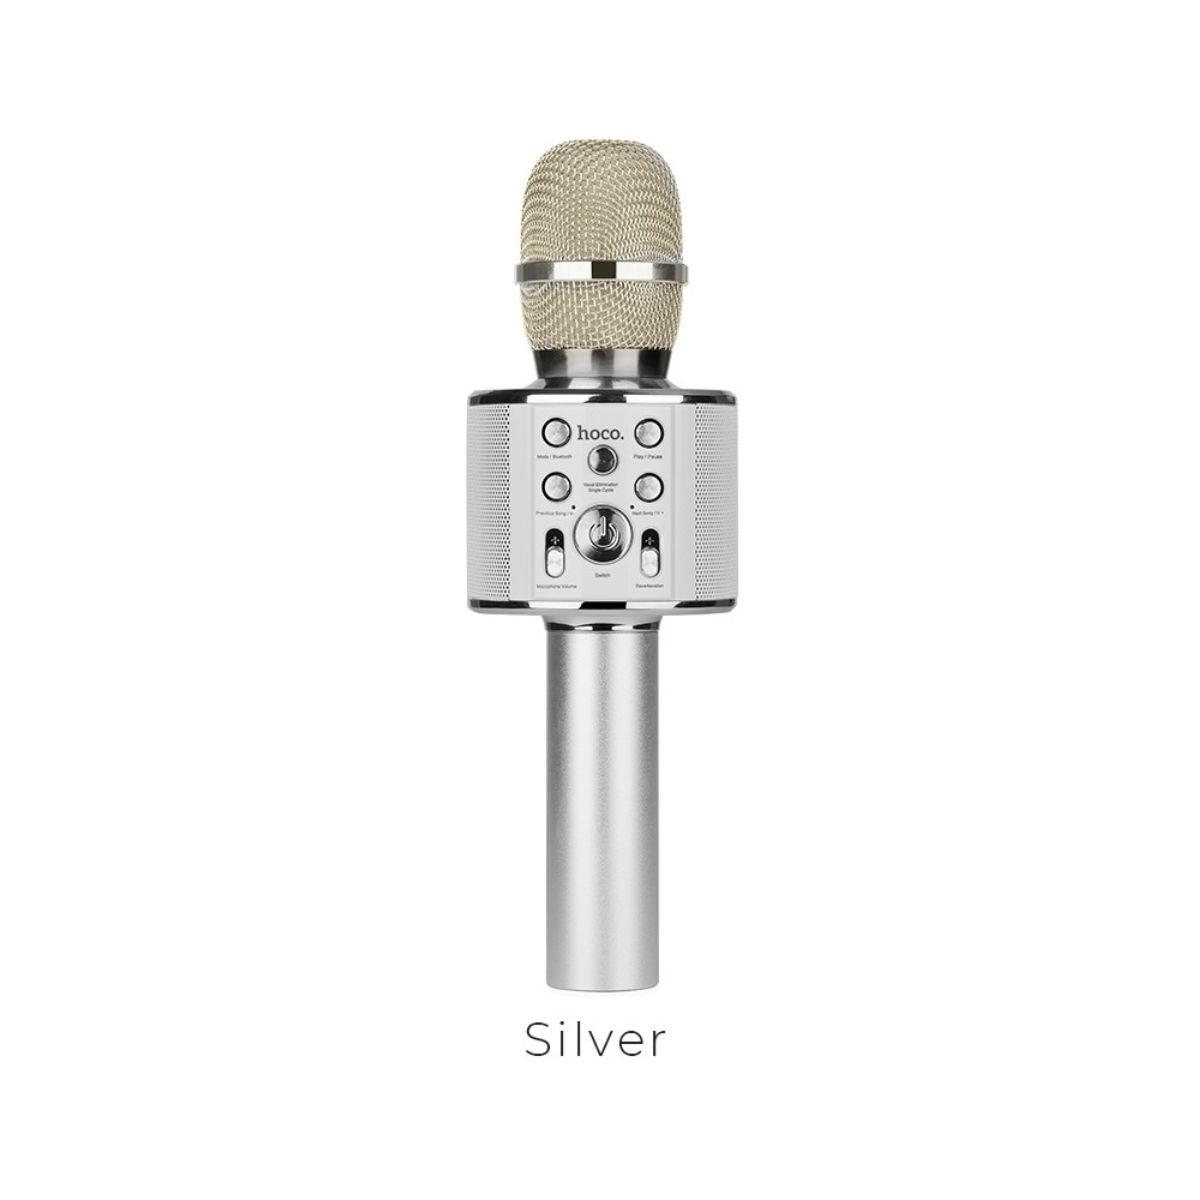 Hoco BK3 Cool Sound KTV Microphone - Silver